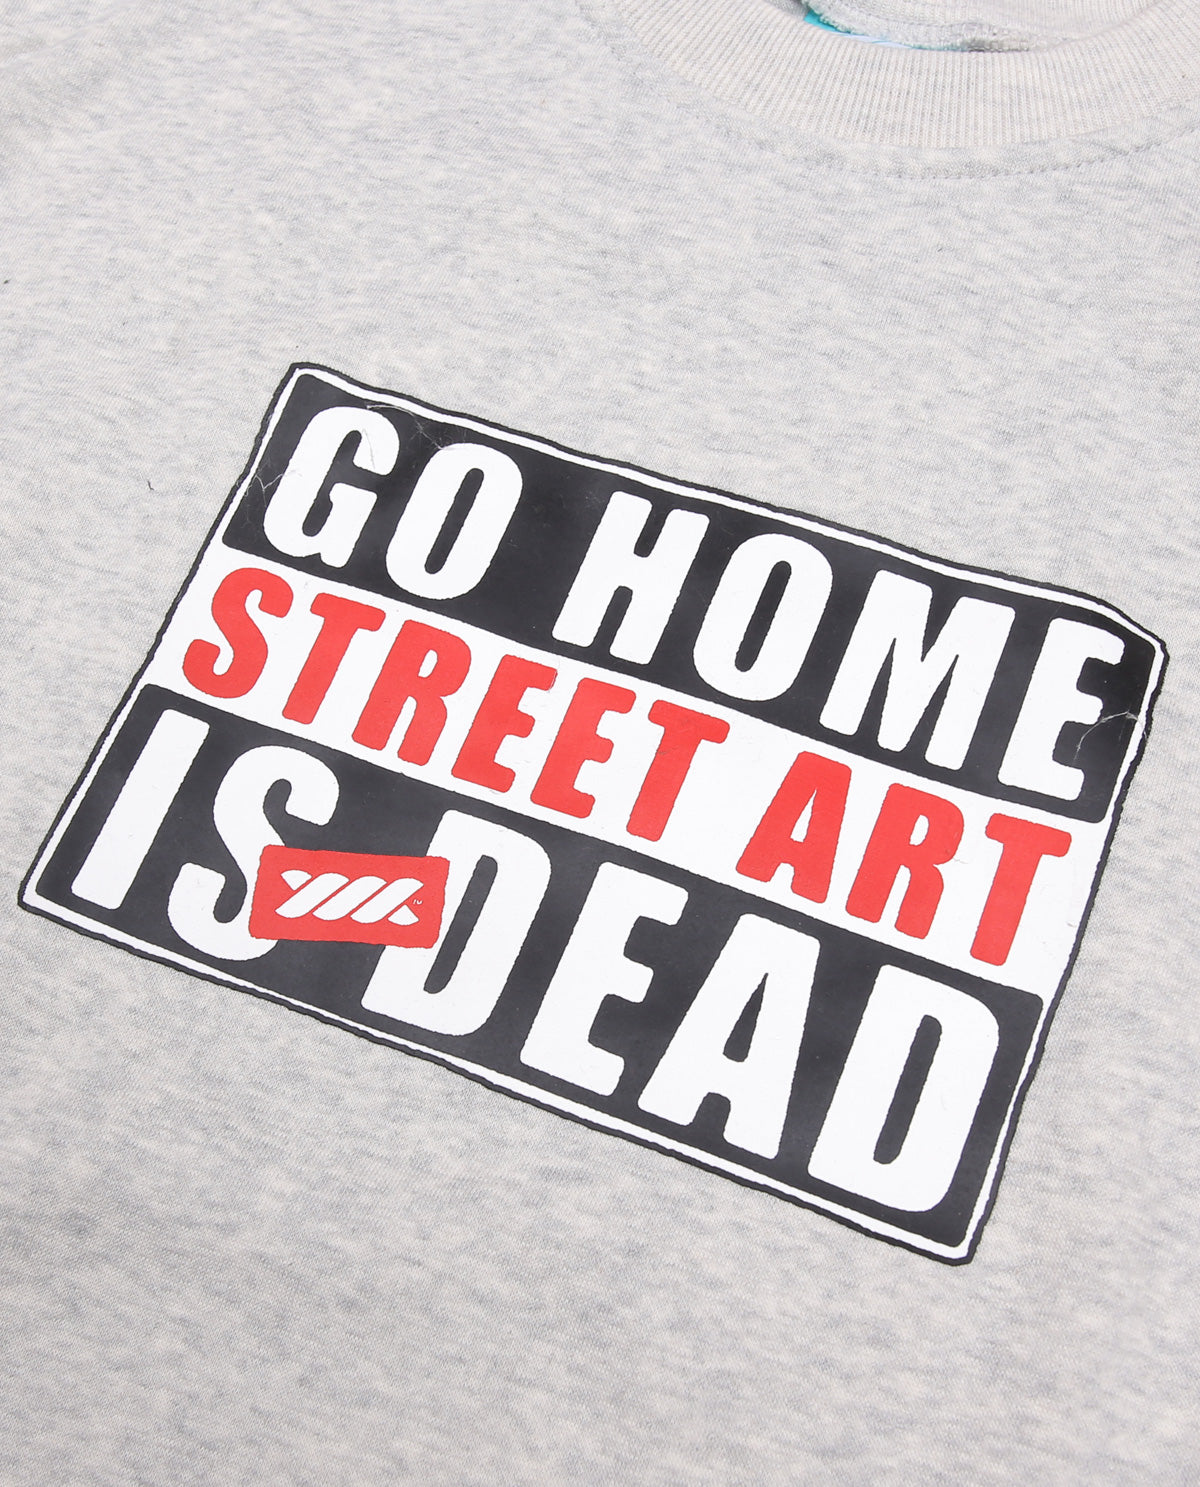 WADEZIG! SWEATER - GO HOME STREET ART MISTY